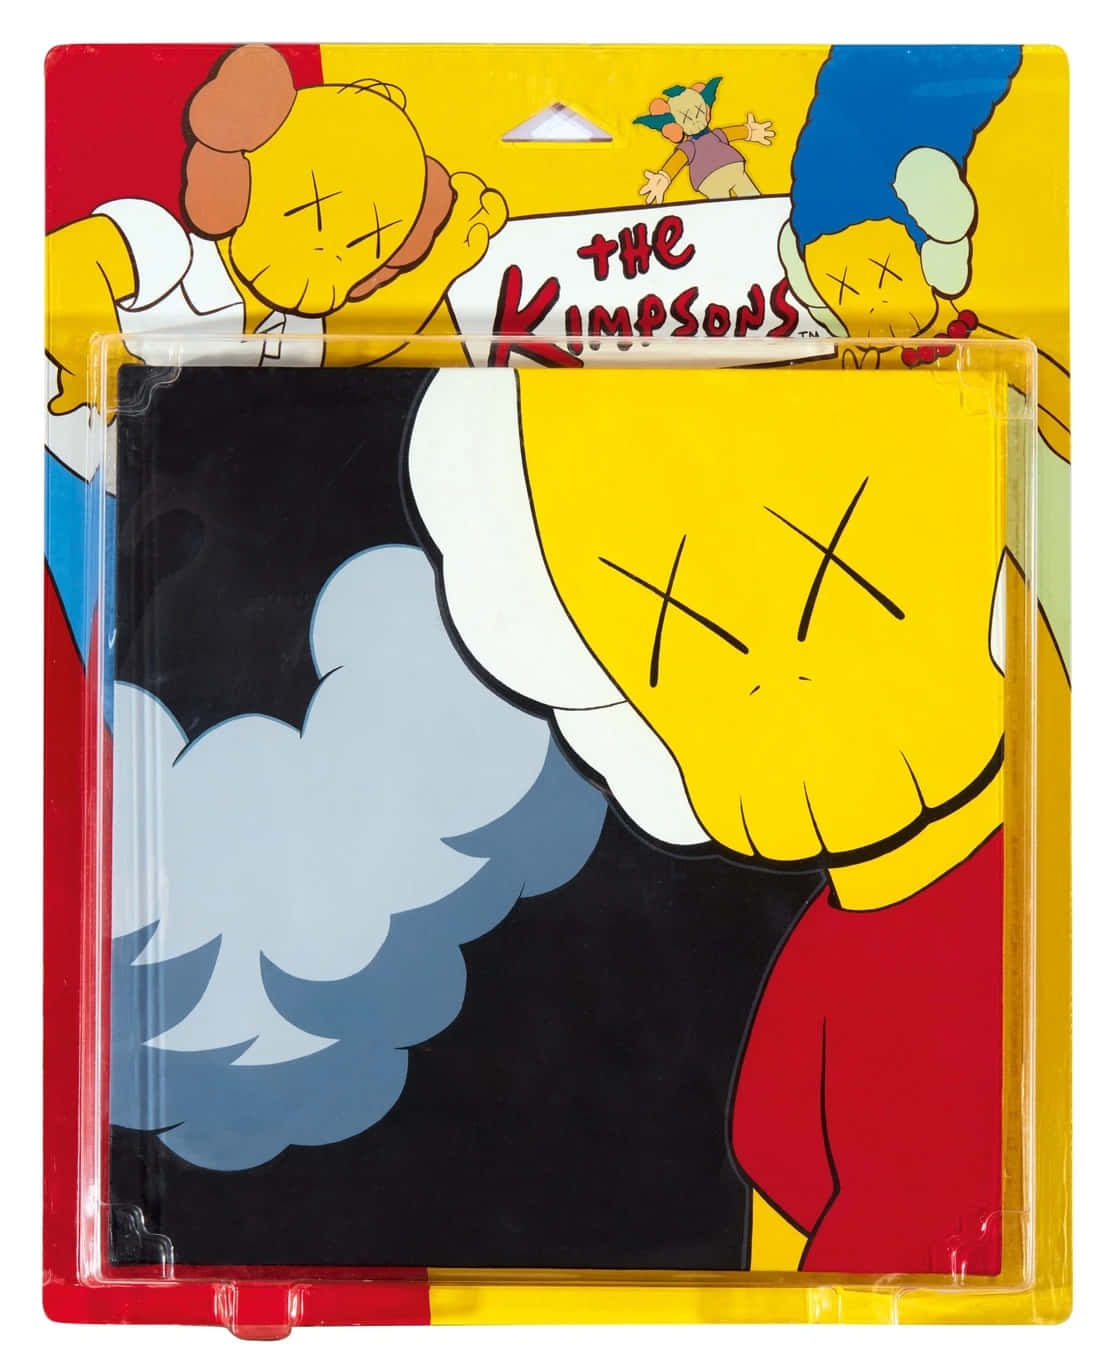 KAWS x The Simpsons Mashup Artwork Wallpaper